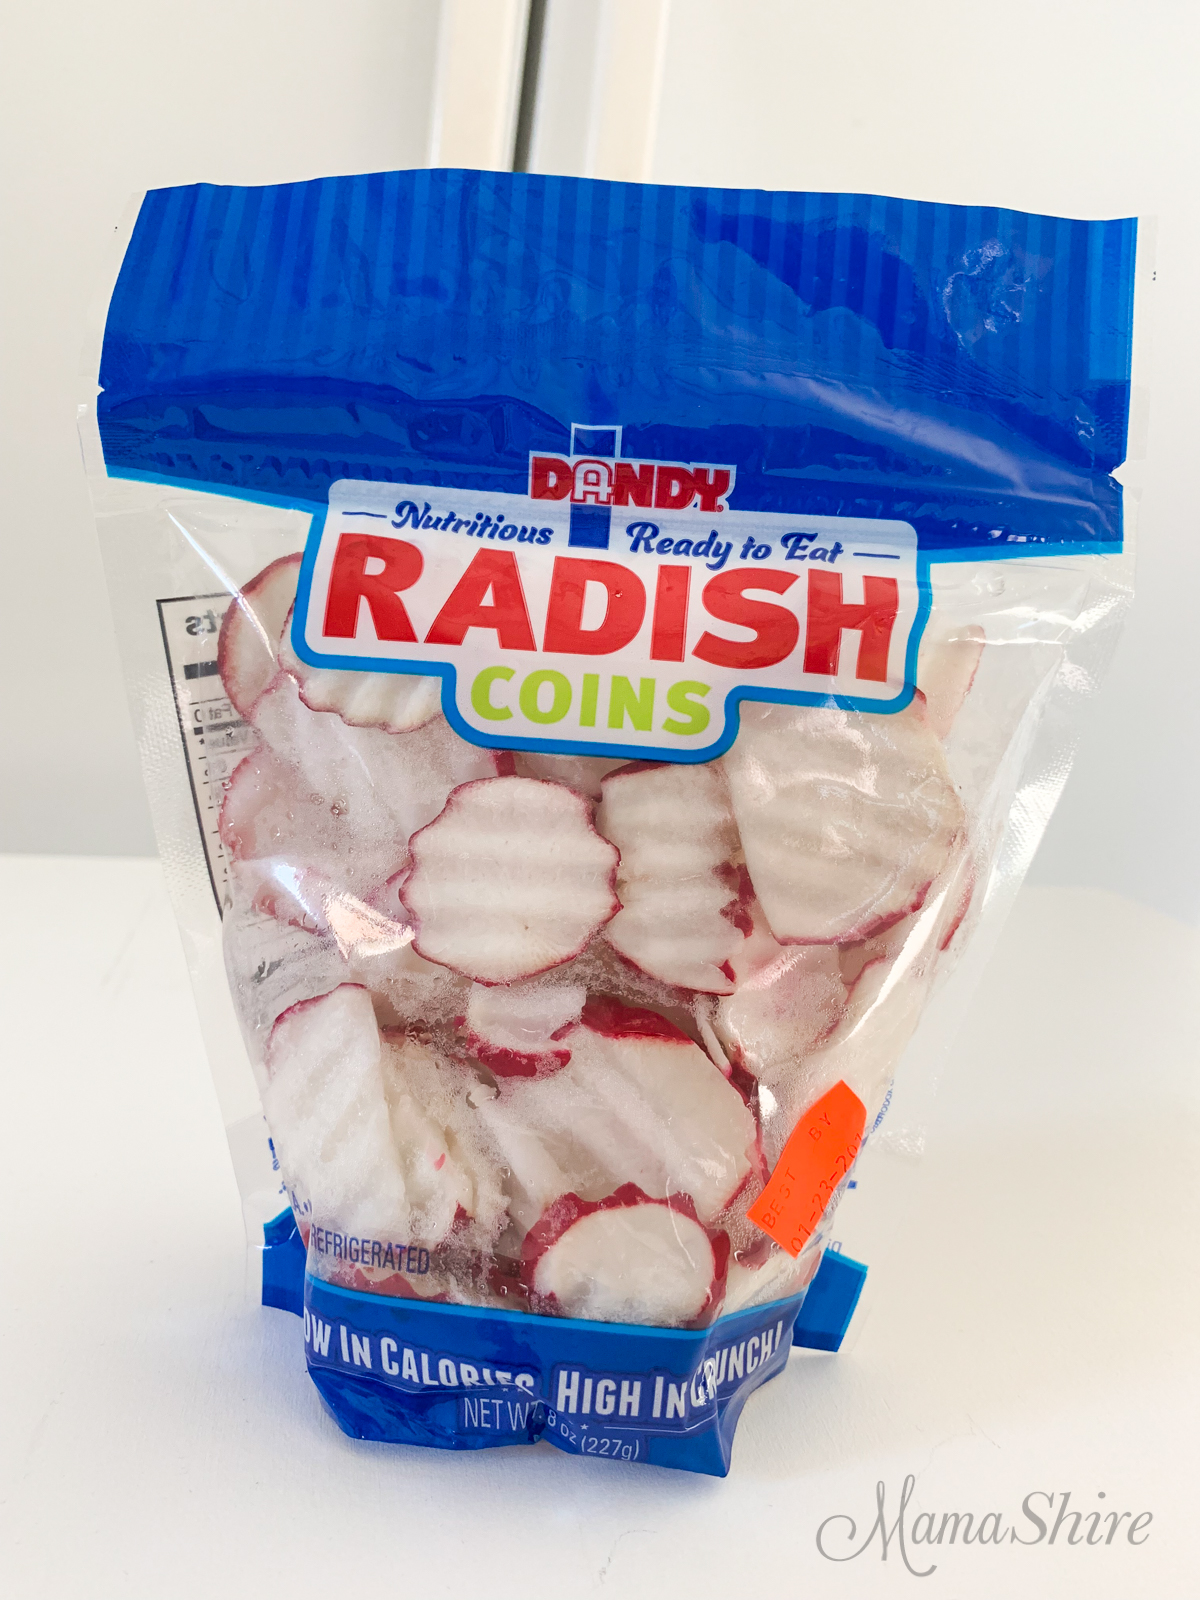 A bag of radish chips